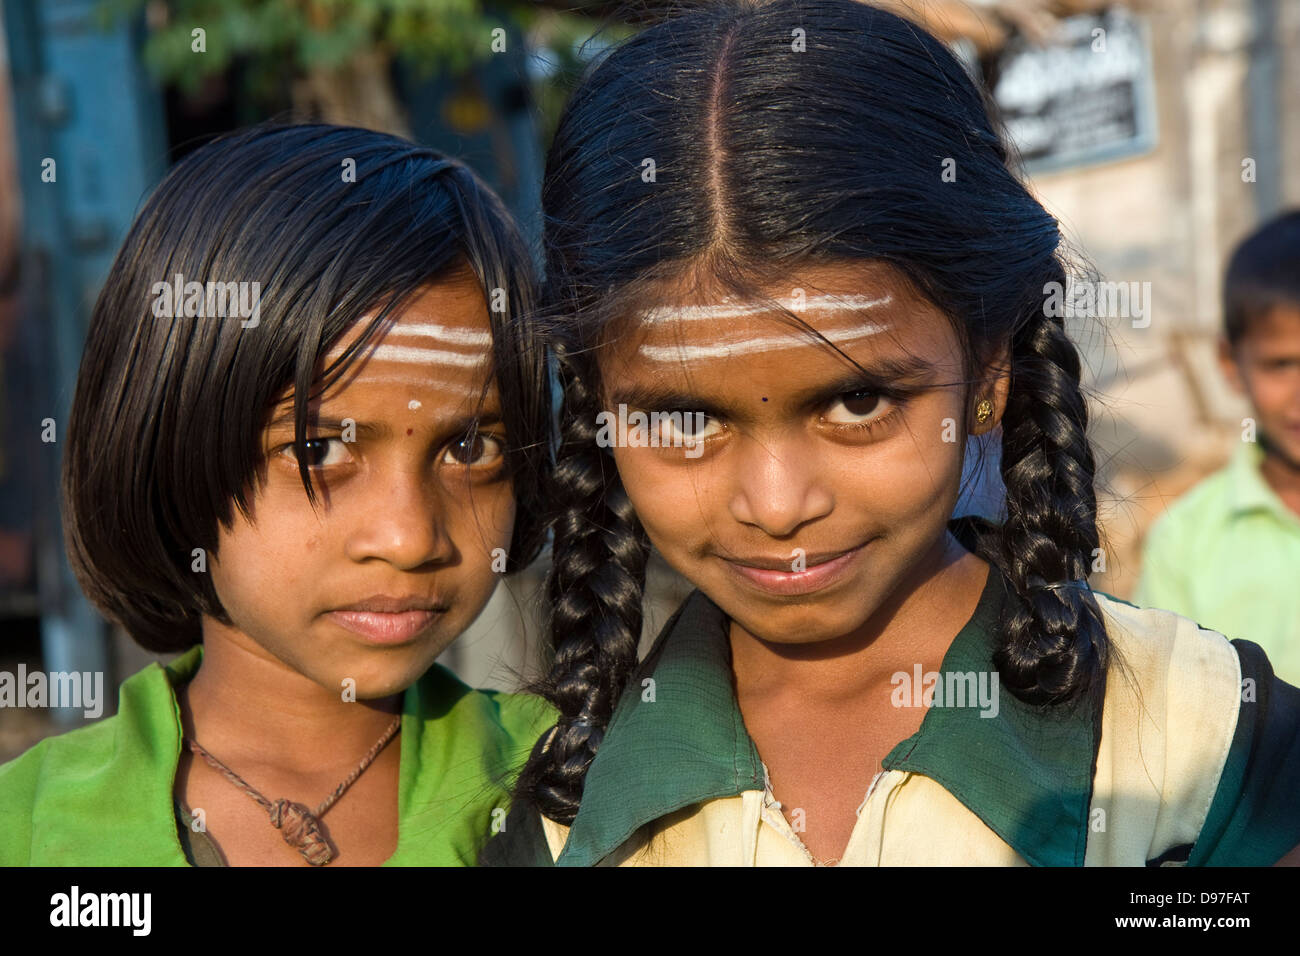 Asia, India, Karnataka, Belavadi, portrait of two Indian girls Stock Photo